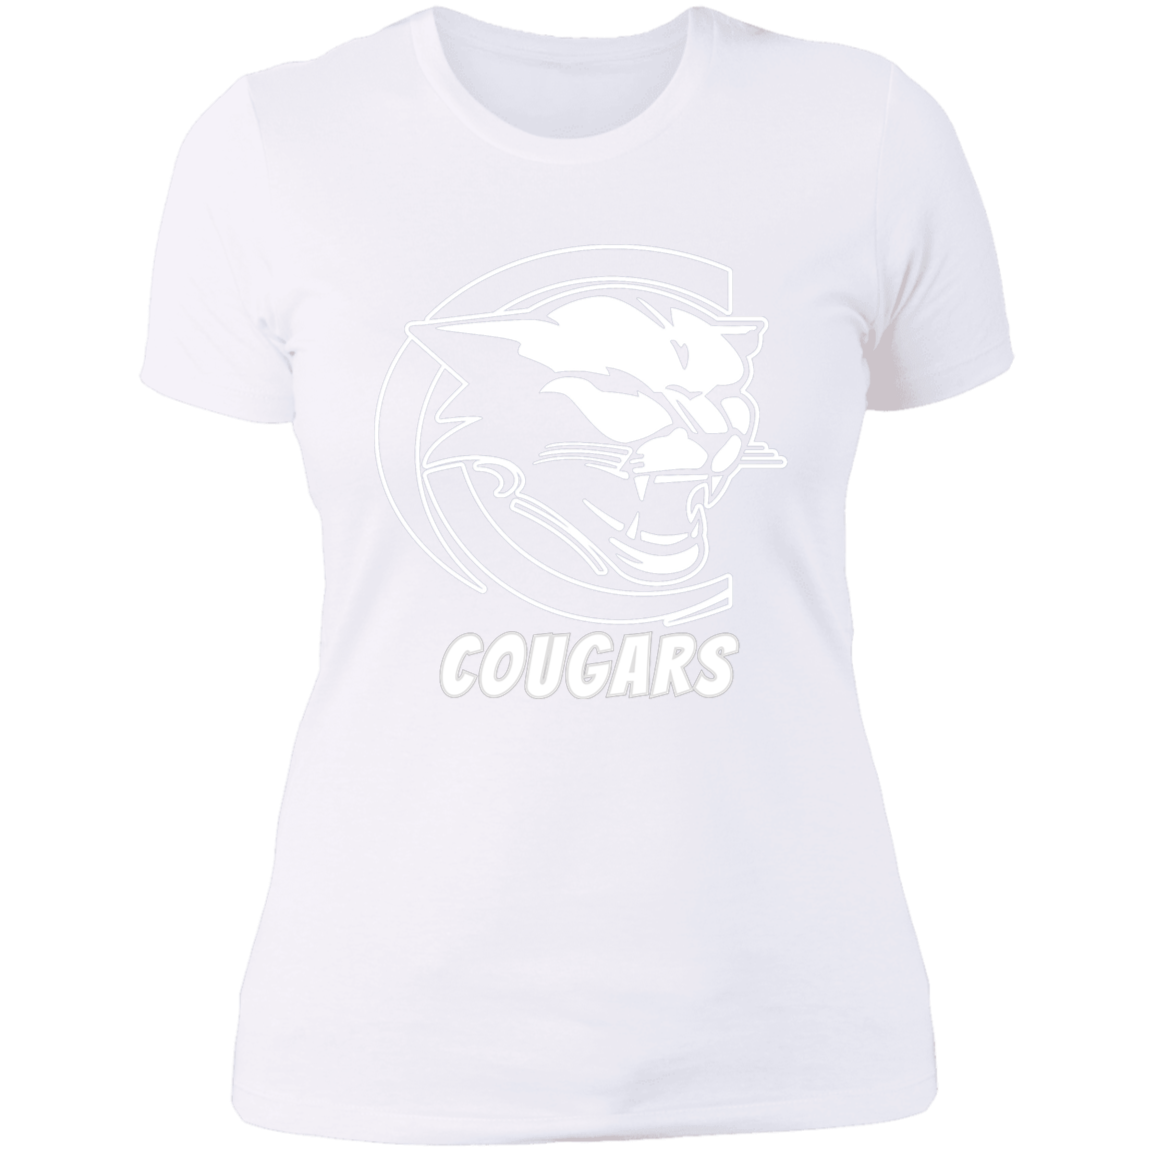 Cougars Ladies' Boyfriend T-Shirt